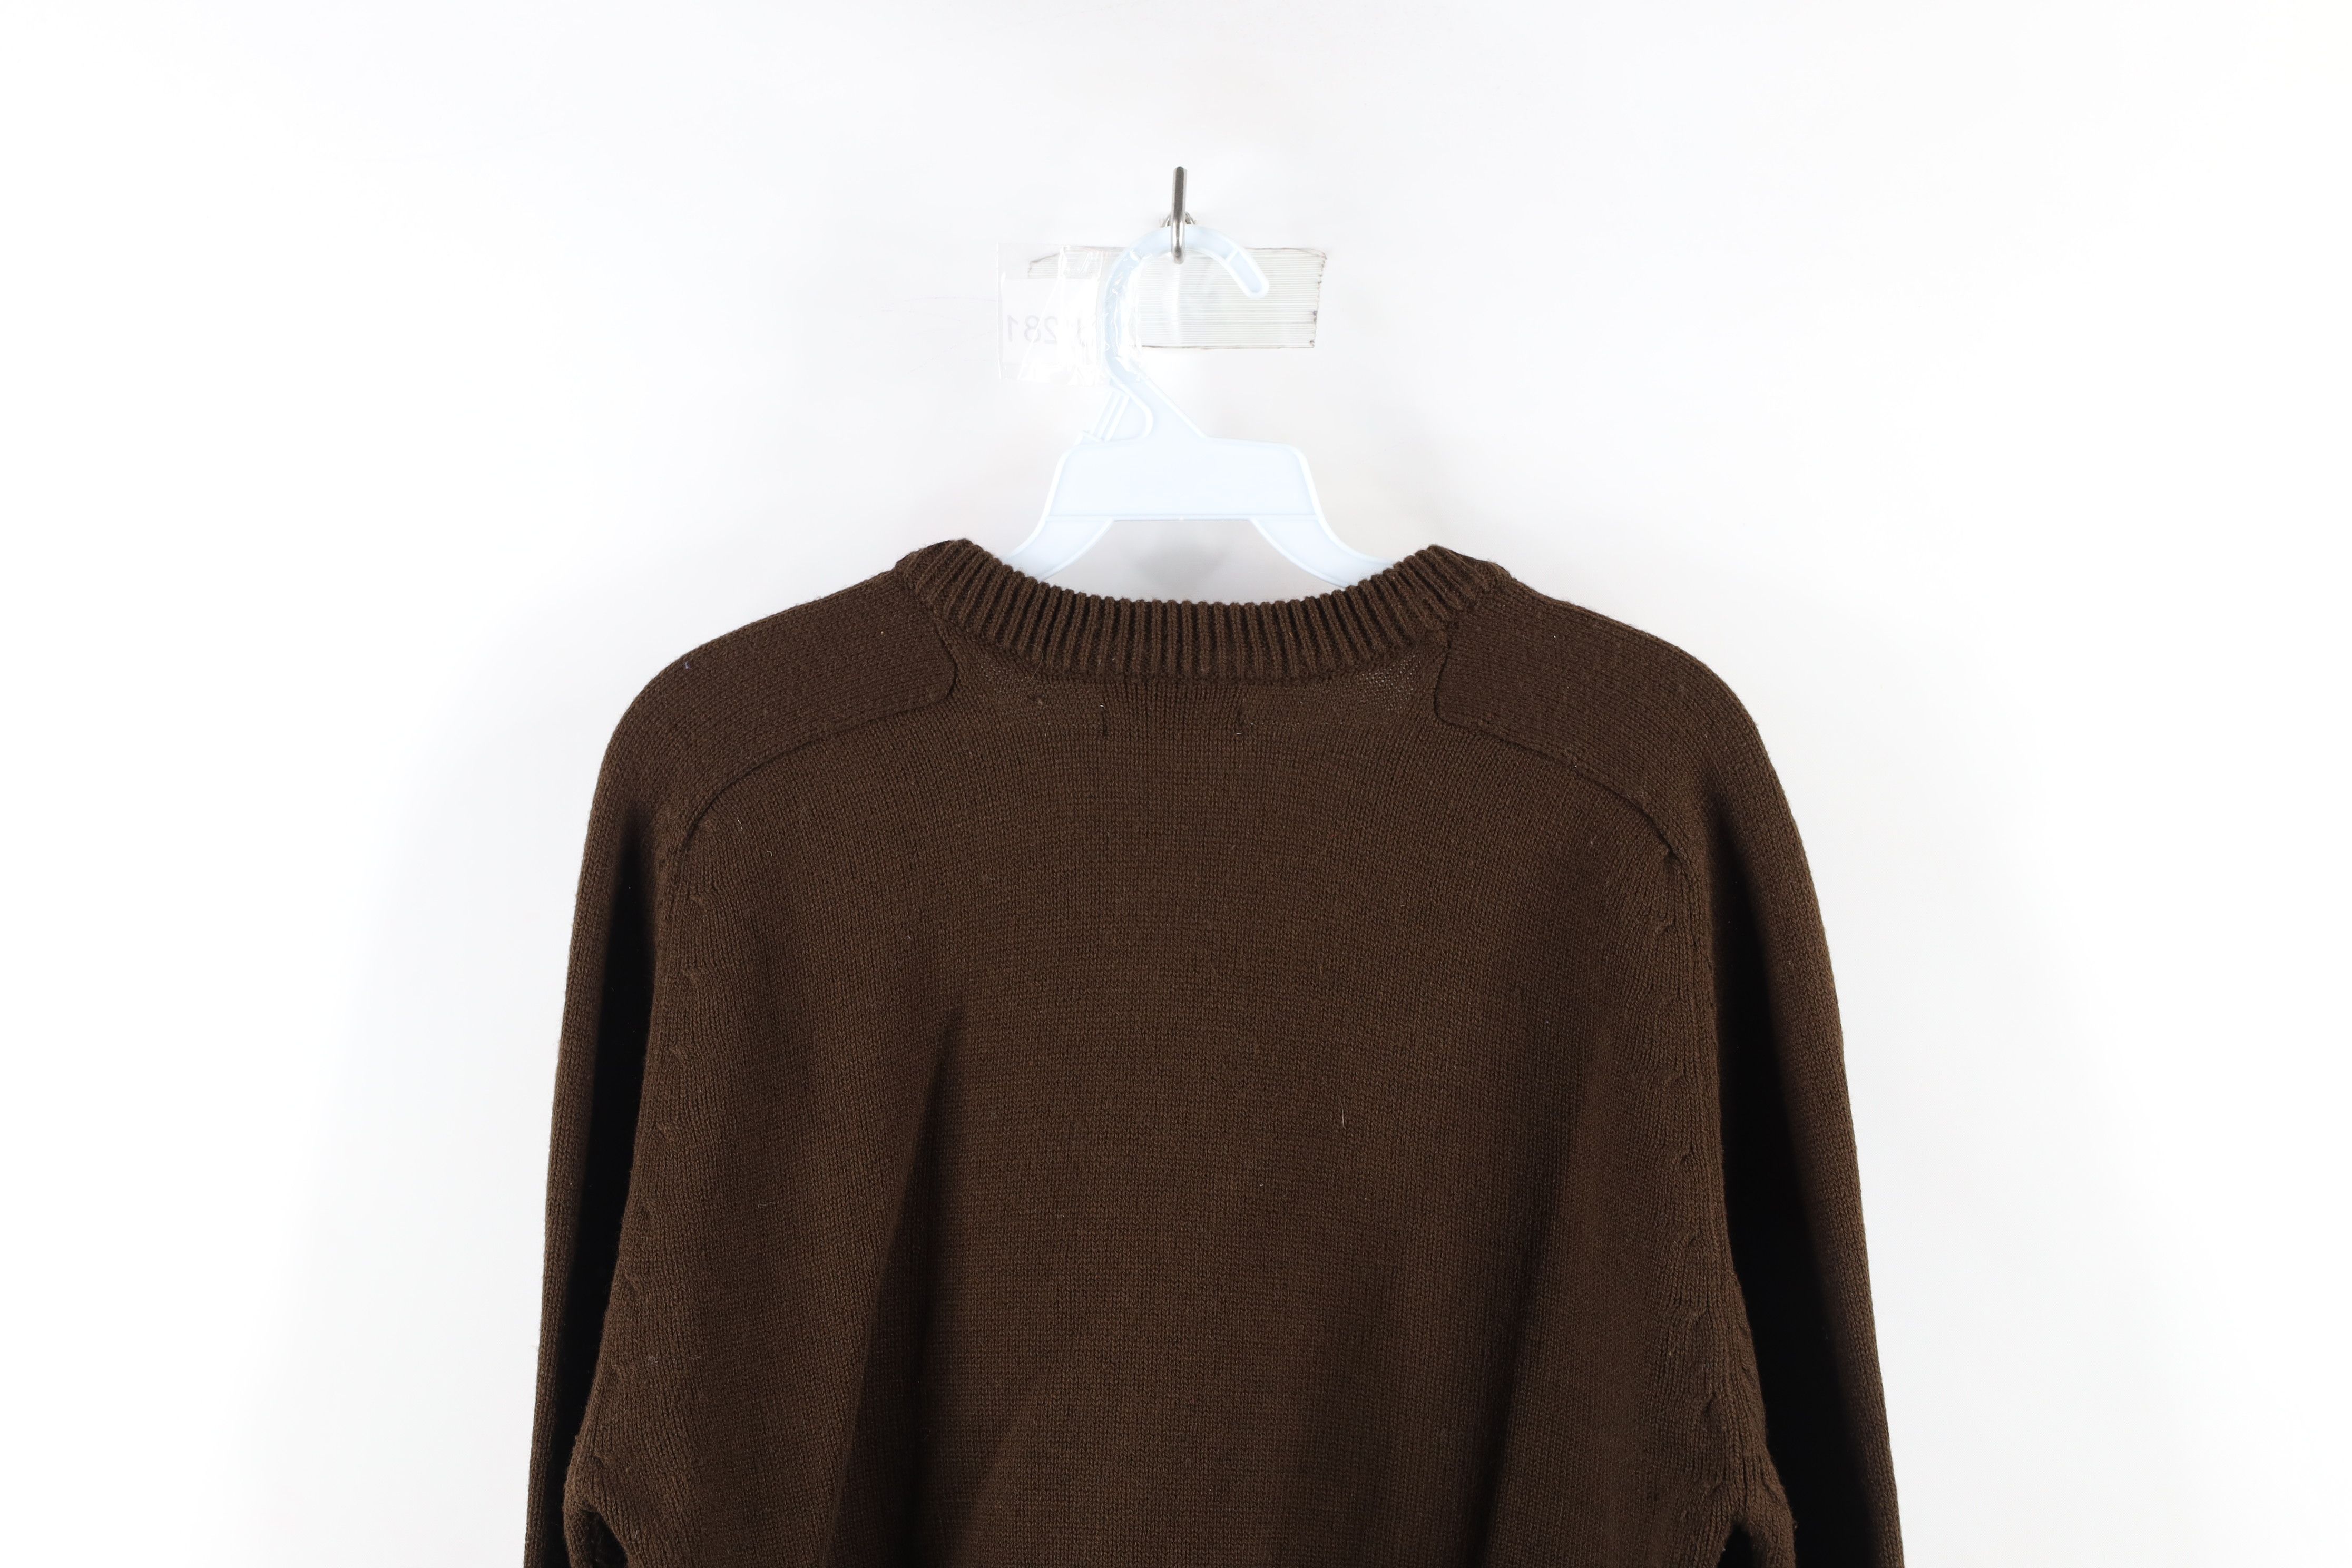 Vintage Vintage 70s Streetwear Blank Knit V-Neck Sweater Brown Size M / US 6-8 / IT 42-44 - 6 Thumbnail